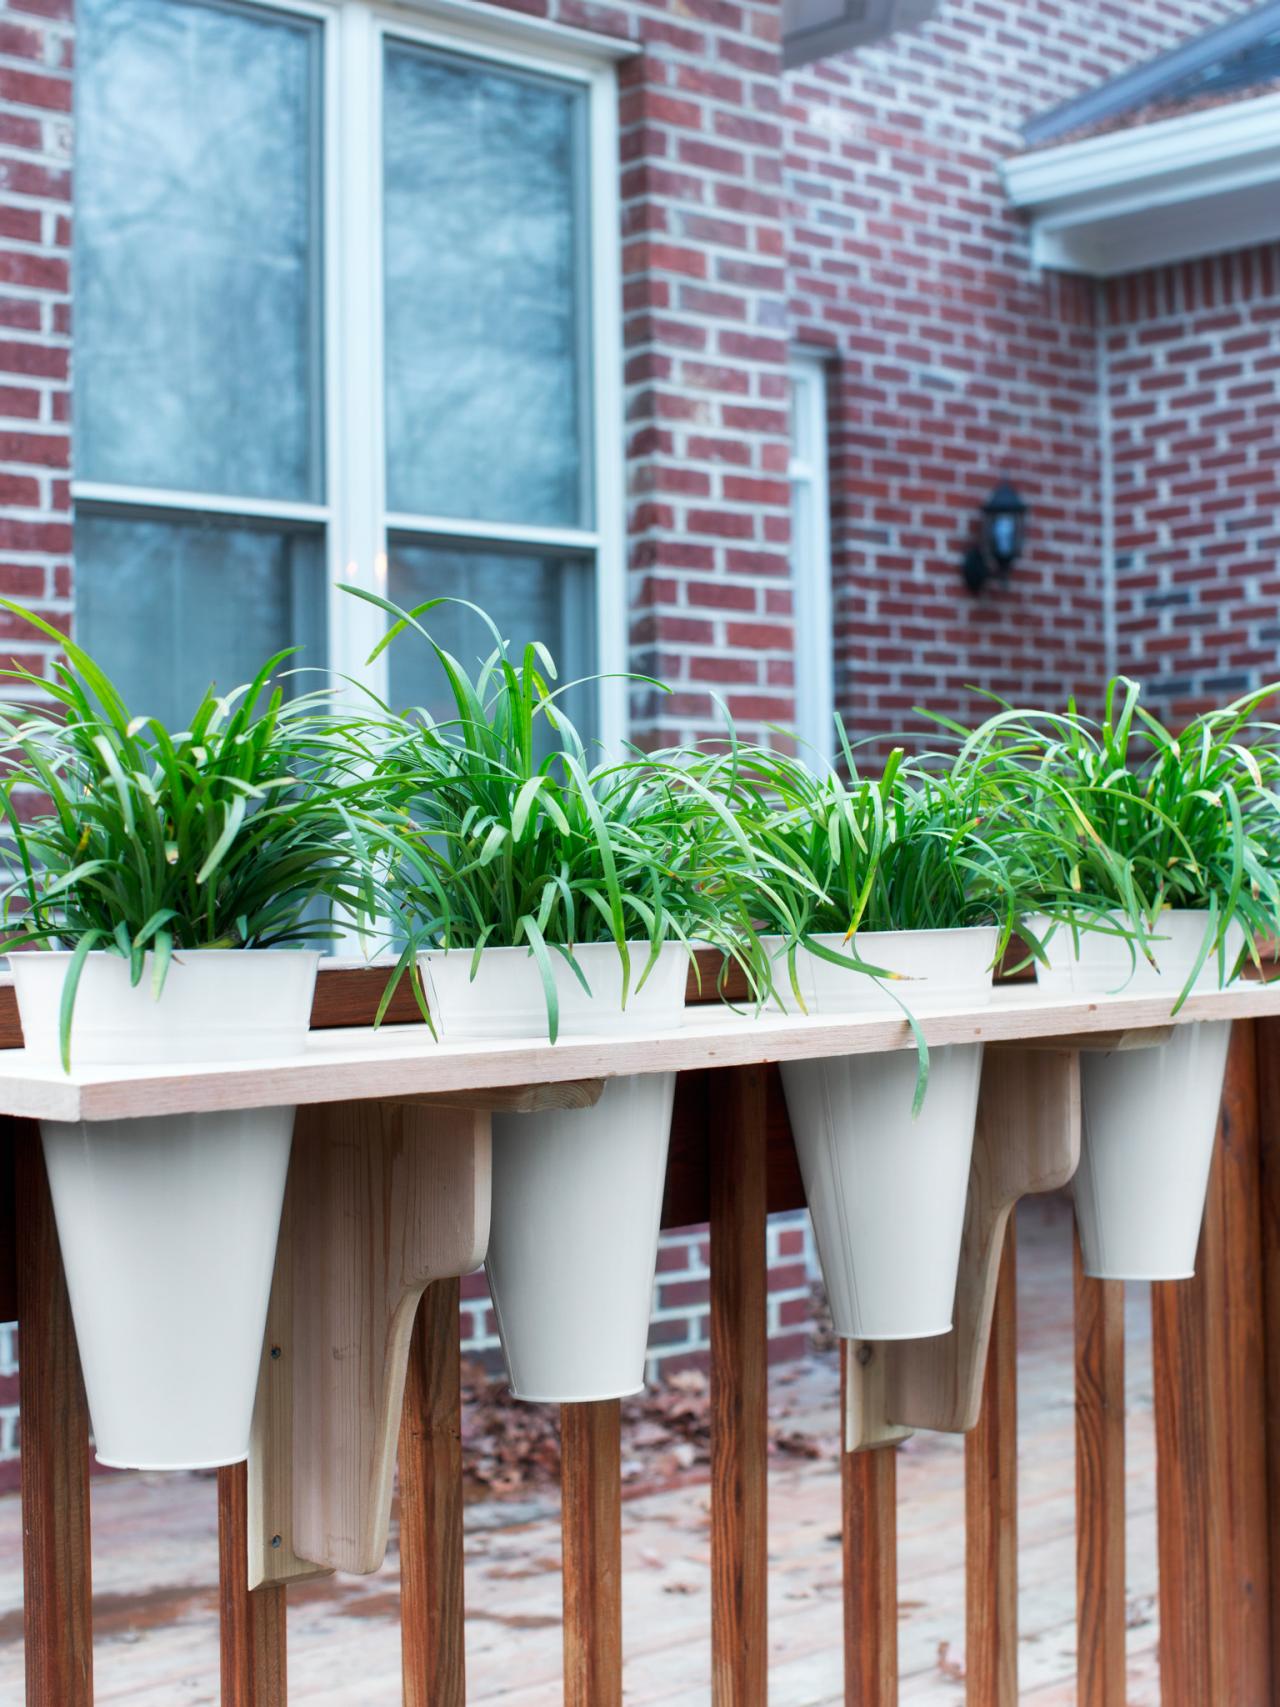 Design Ideas For Deck Planter Bo Diy, Patio Flower Box Ideas